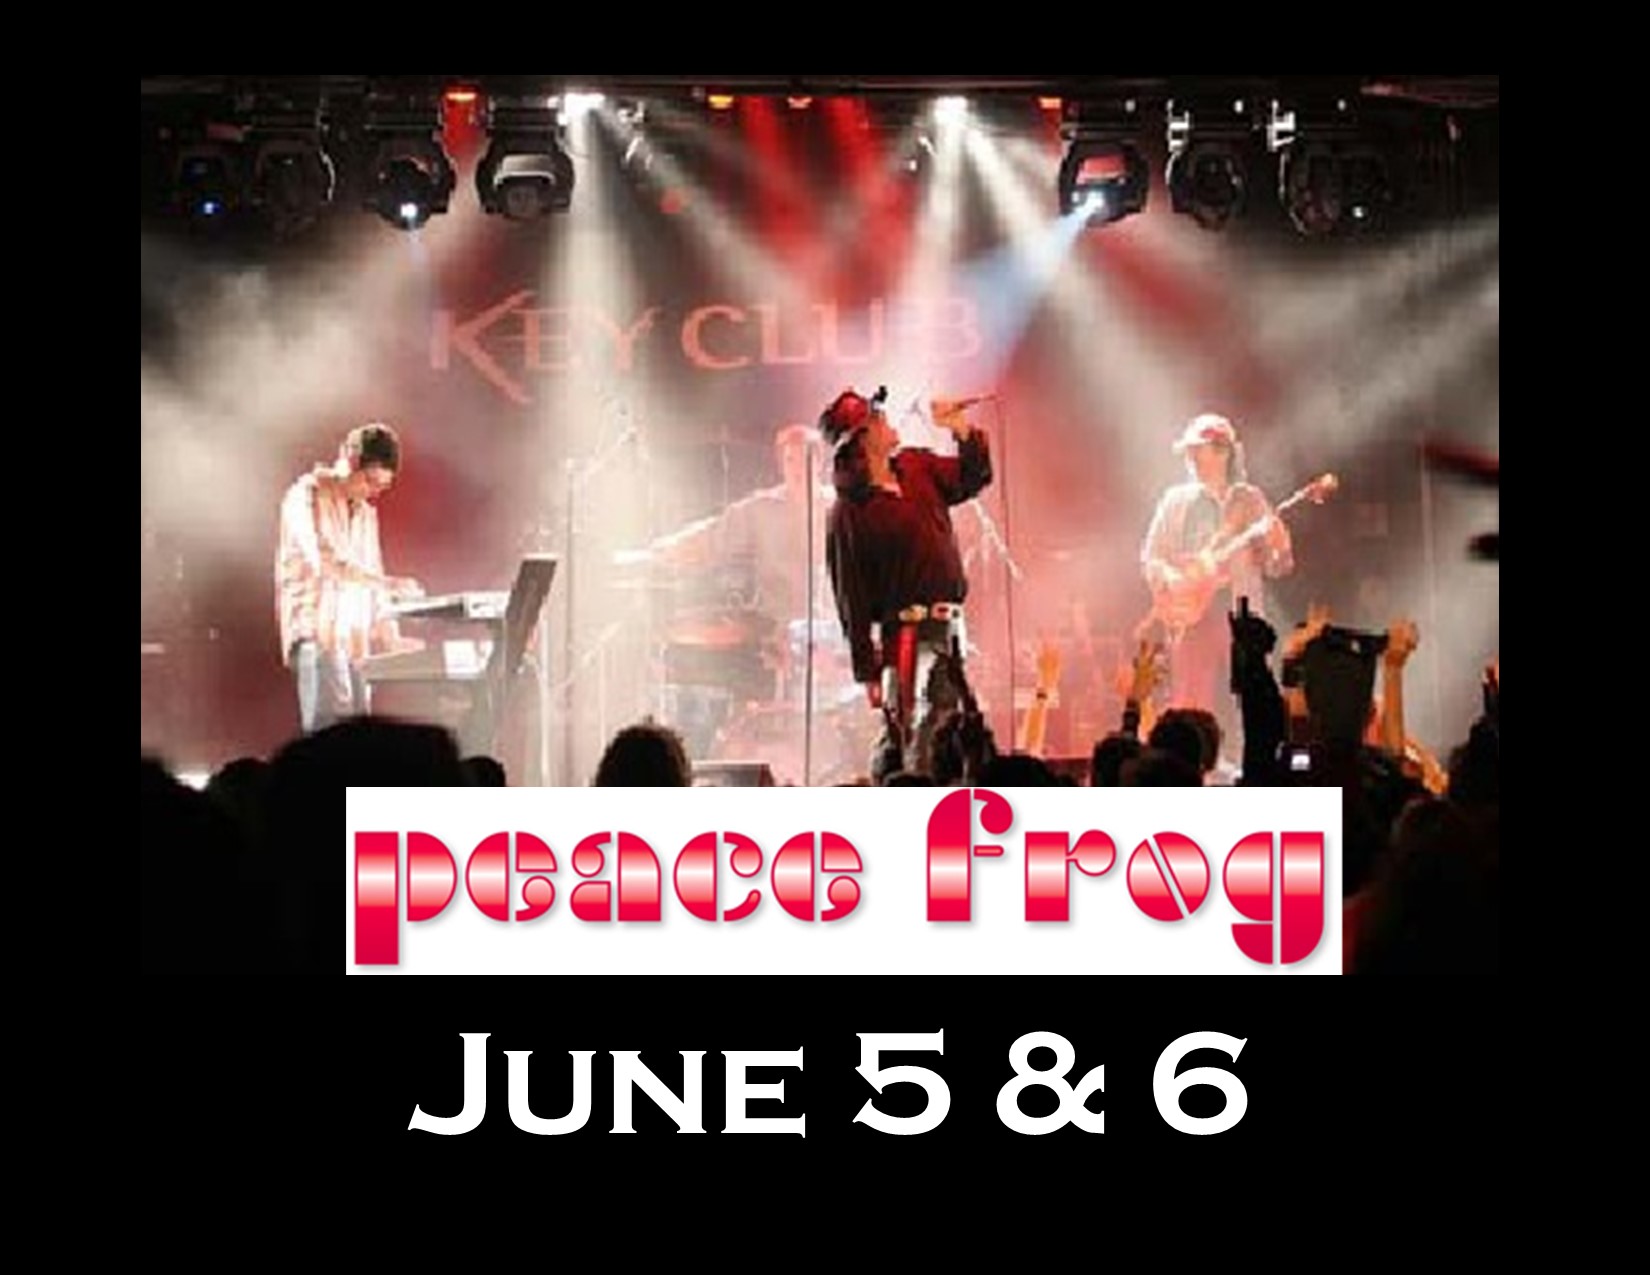 peace frog tour